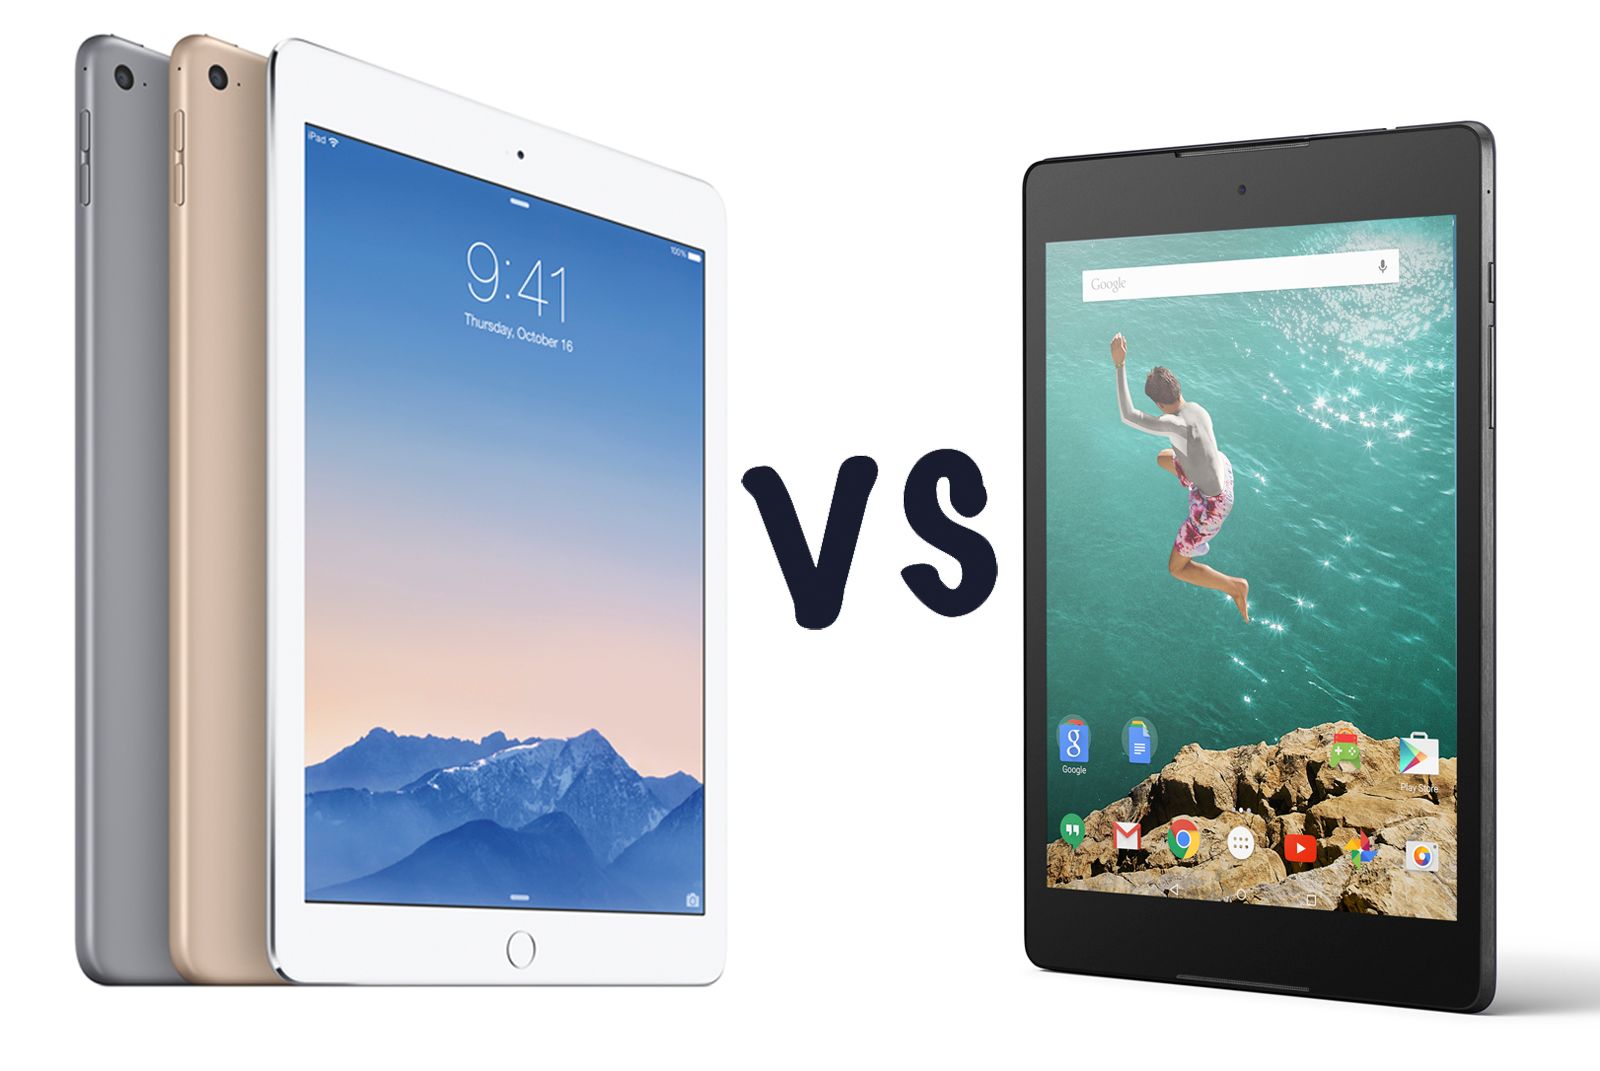 ipad air 2 vs nexus 9 battle of the brand new tablets image 1